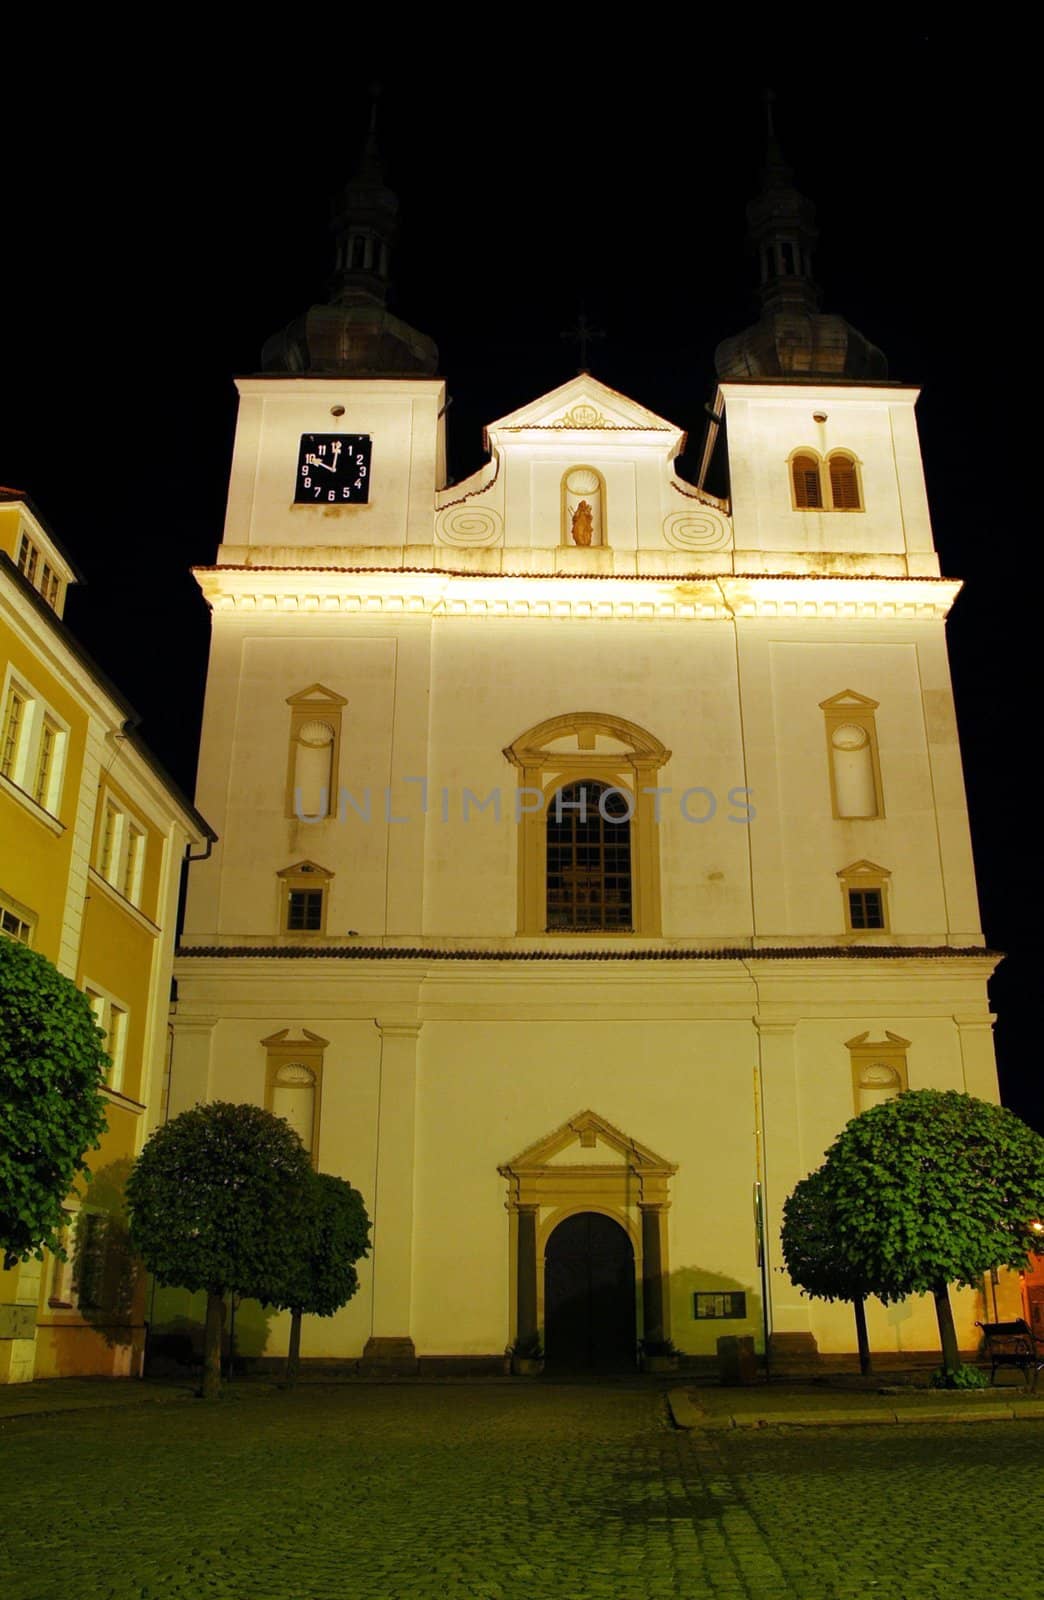 Church at night by drakodav